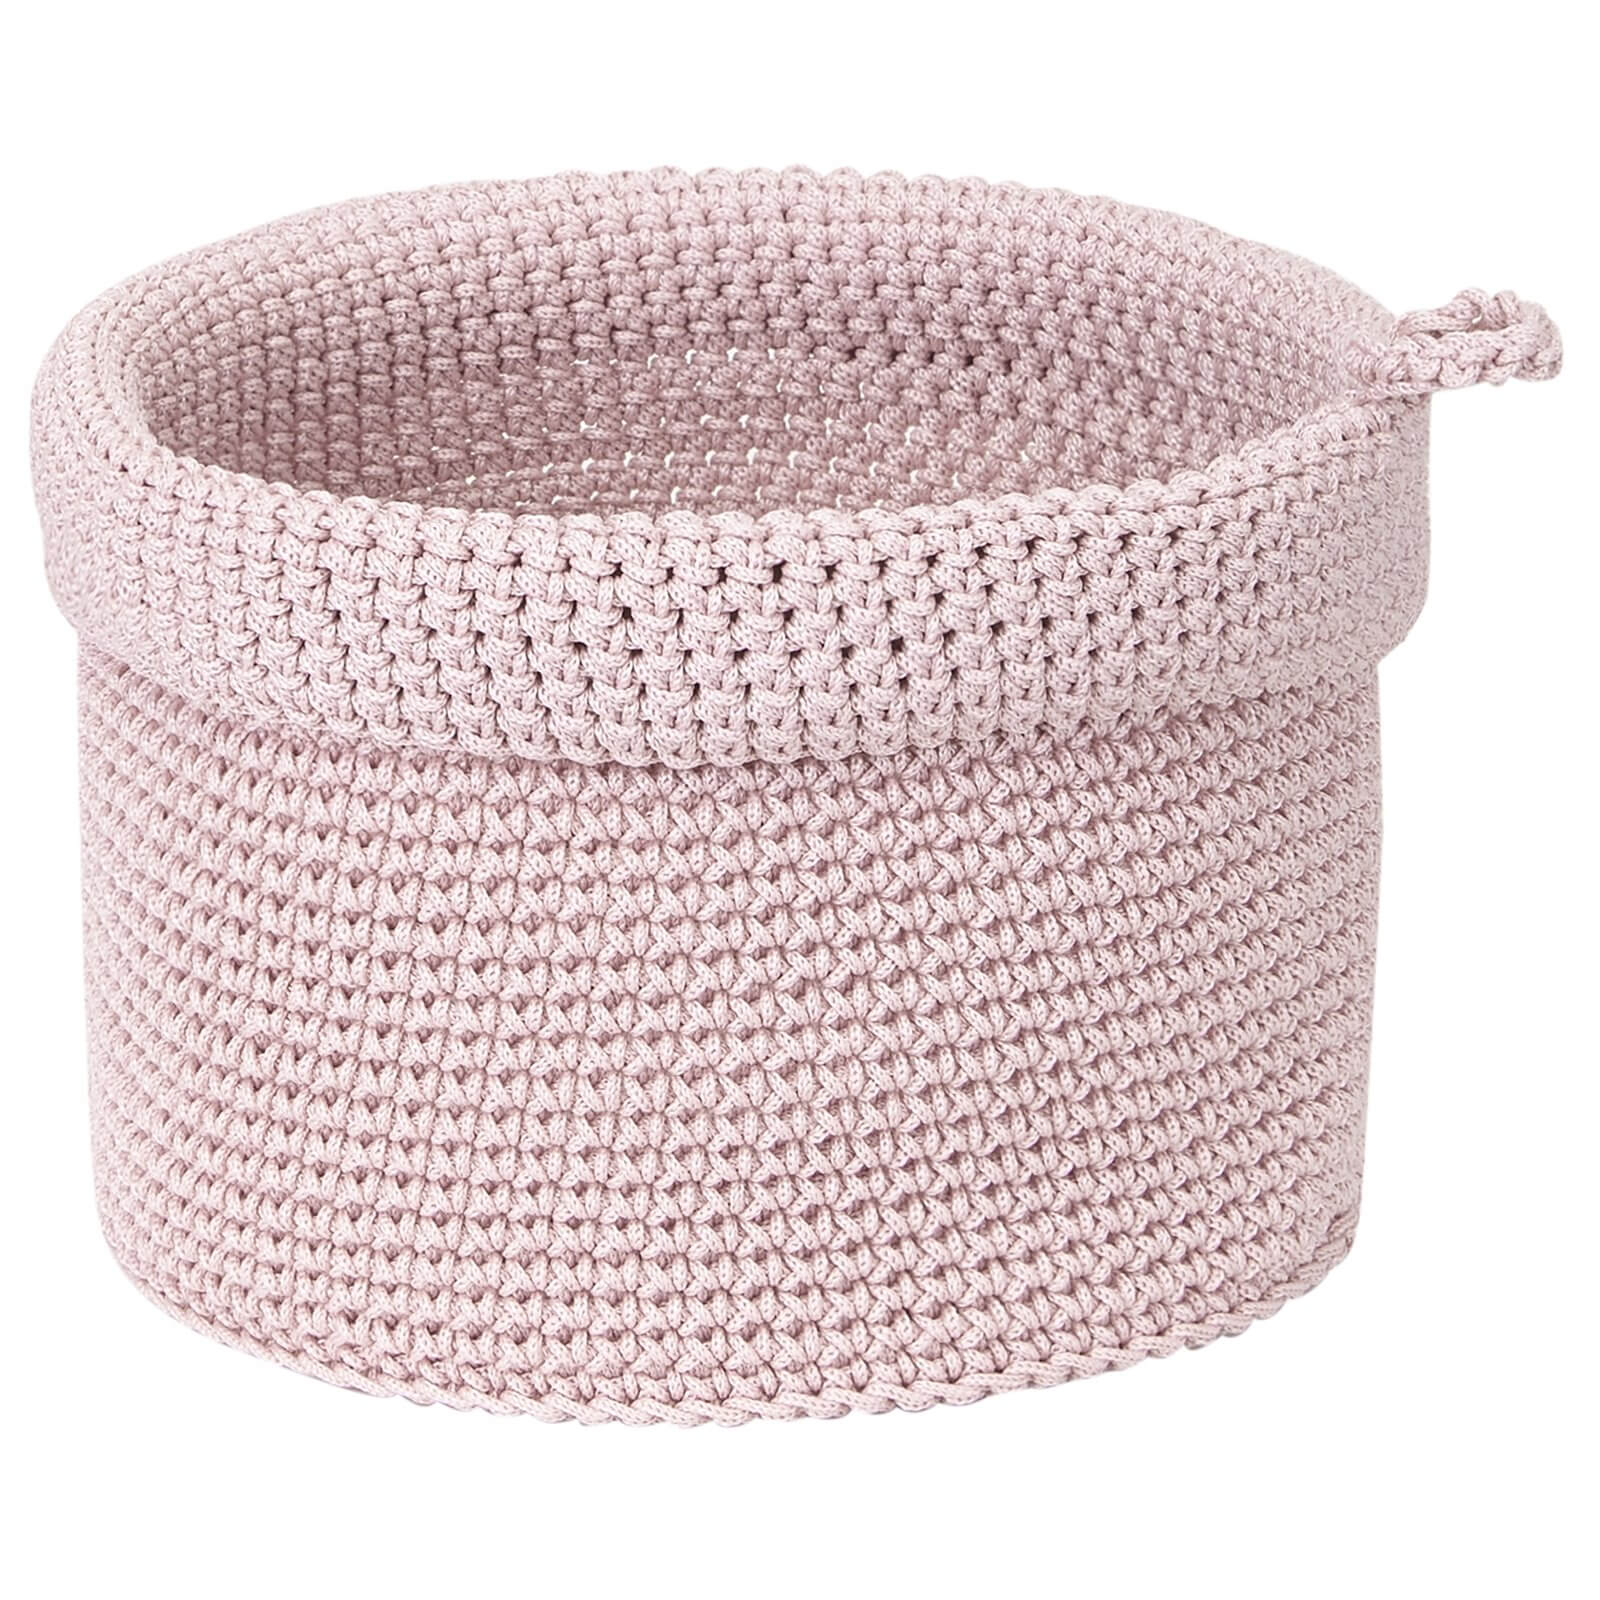 Photo of Knitted Storage Basket - Blush